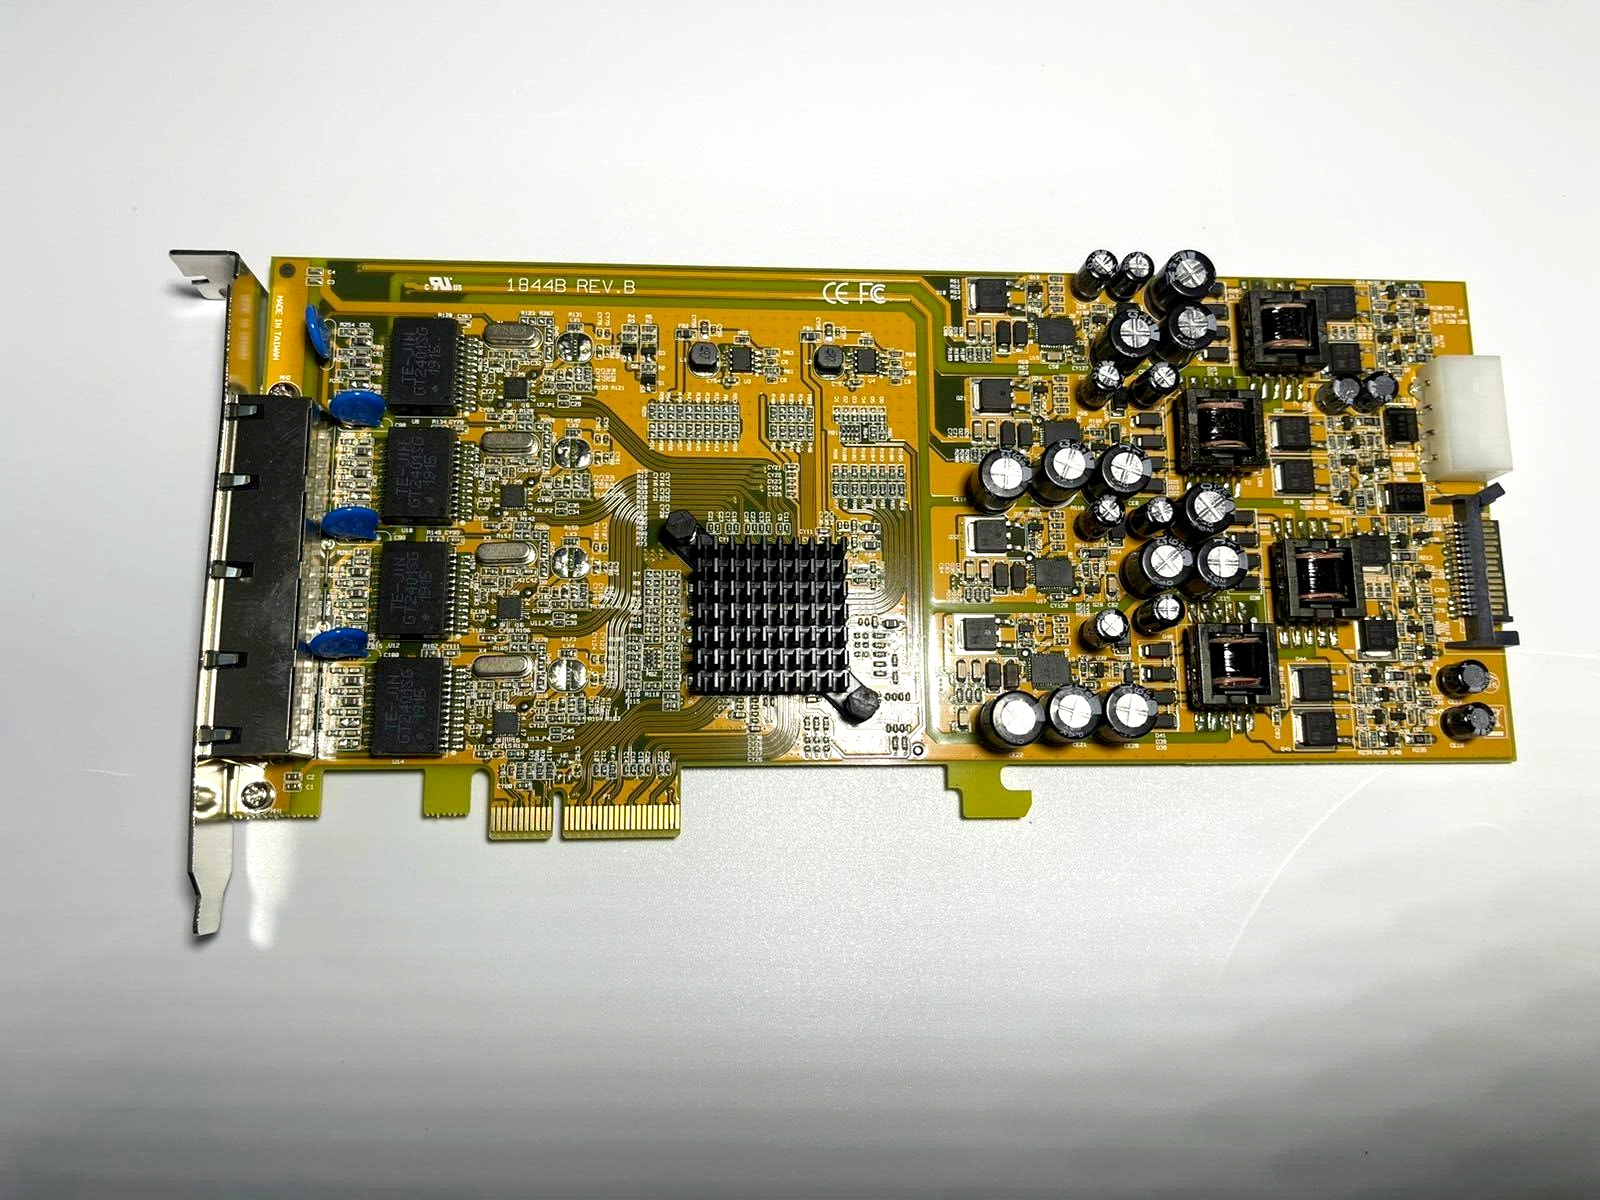 Startech ST4000PEXPSE 4-Port RJ45 Ethernet Power Gigabit PoE PCIe Network Card